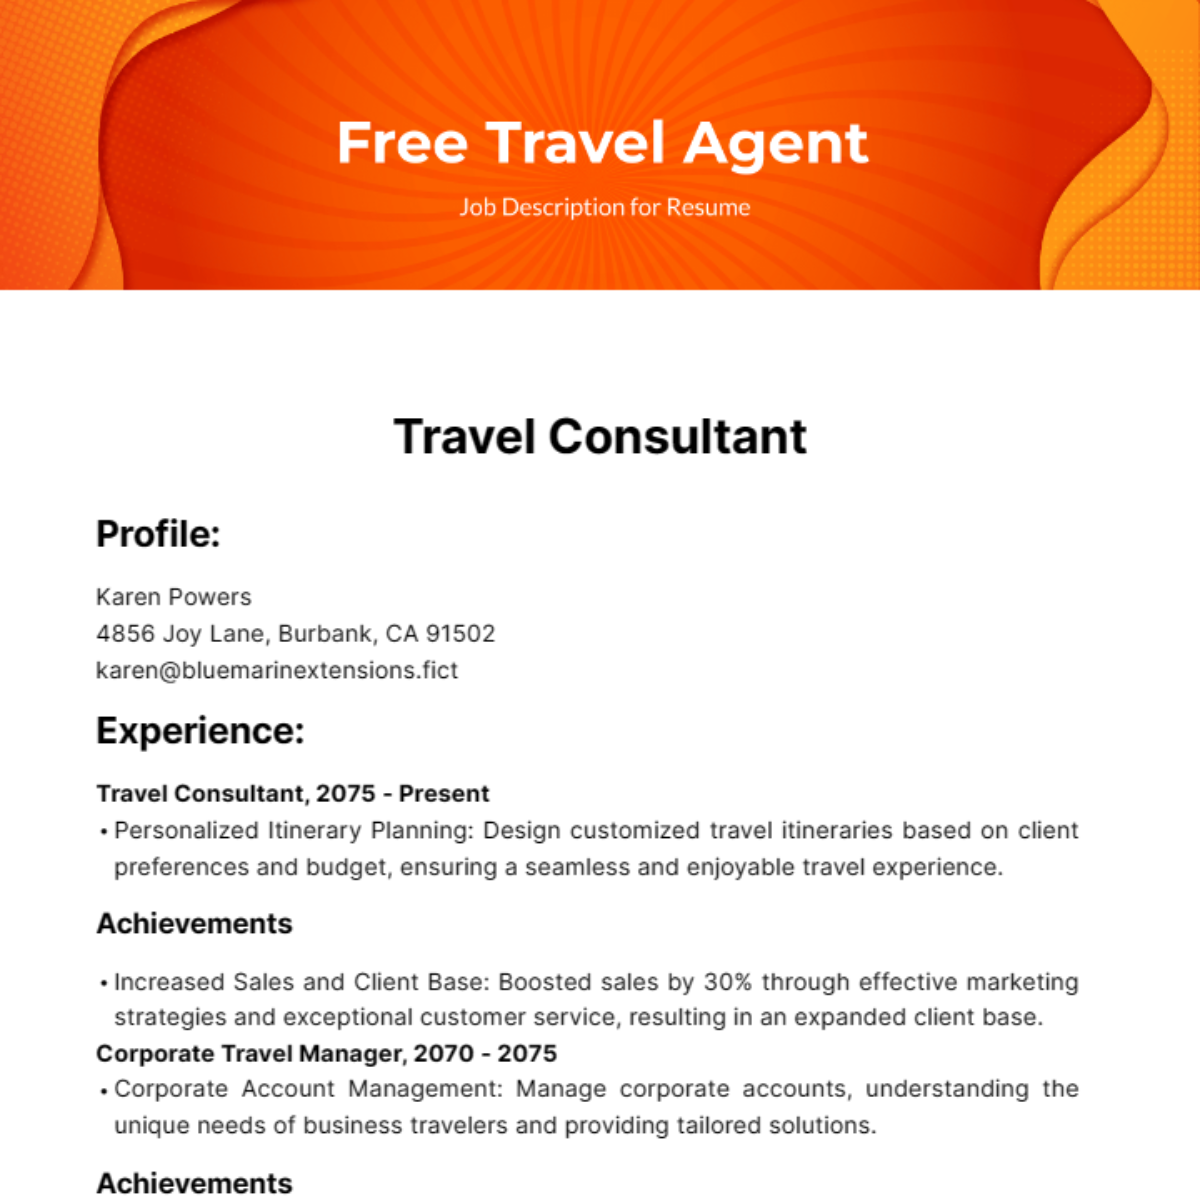 Free Travel Agent Job Description for Resume Template